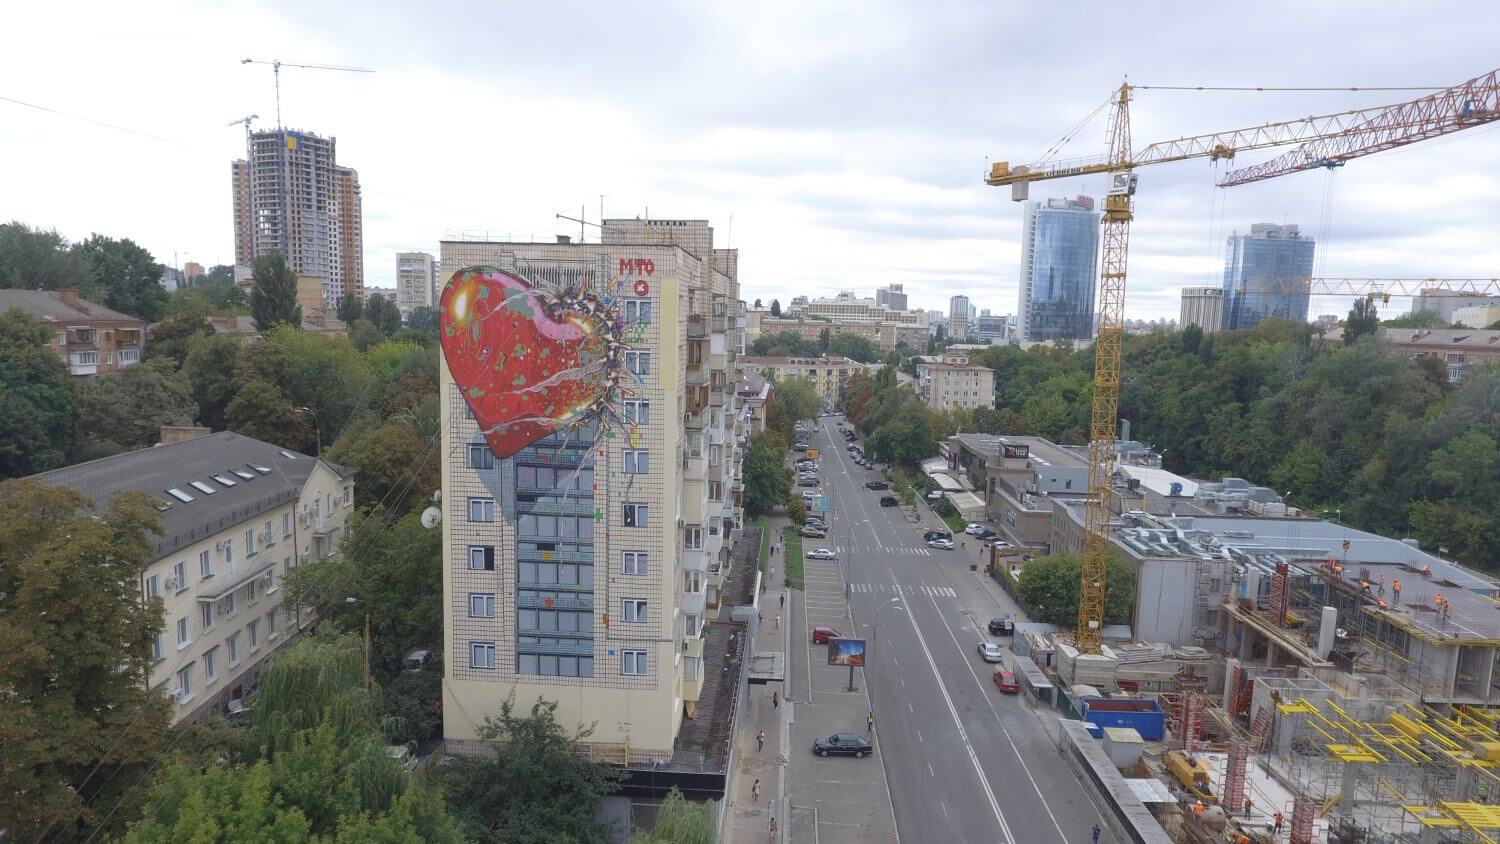 Street Artist MTO ‘From Russia with Love’, Kiev, Ukraine 2016